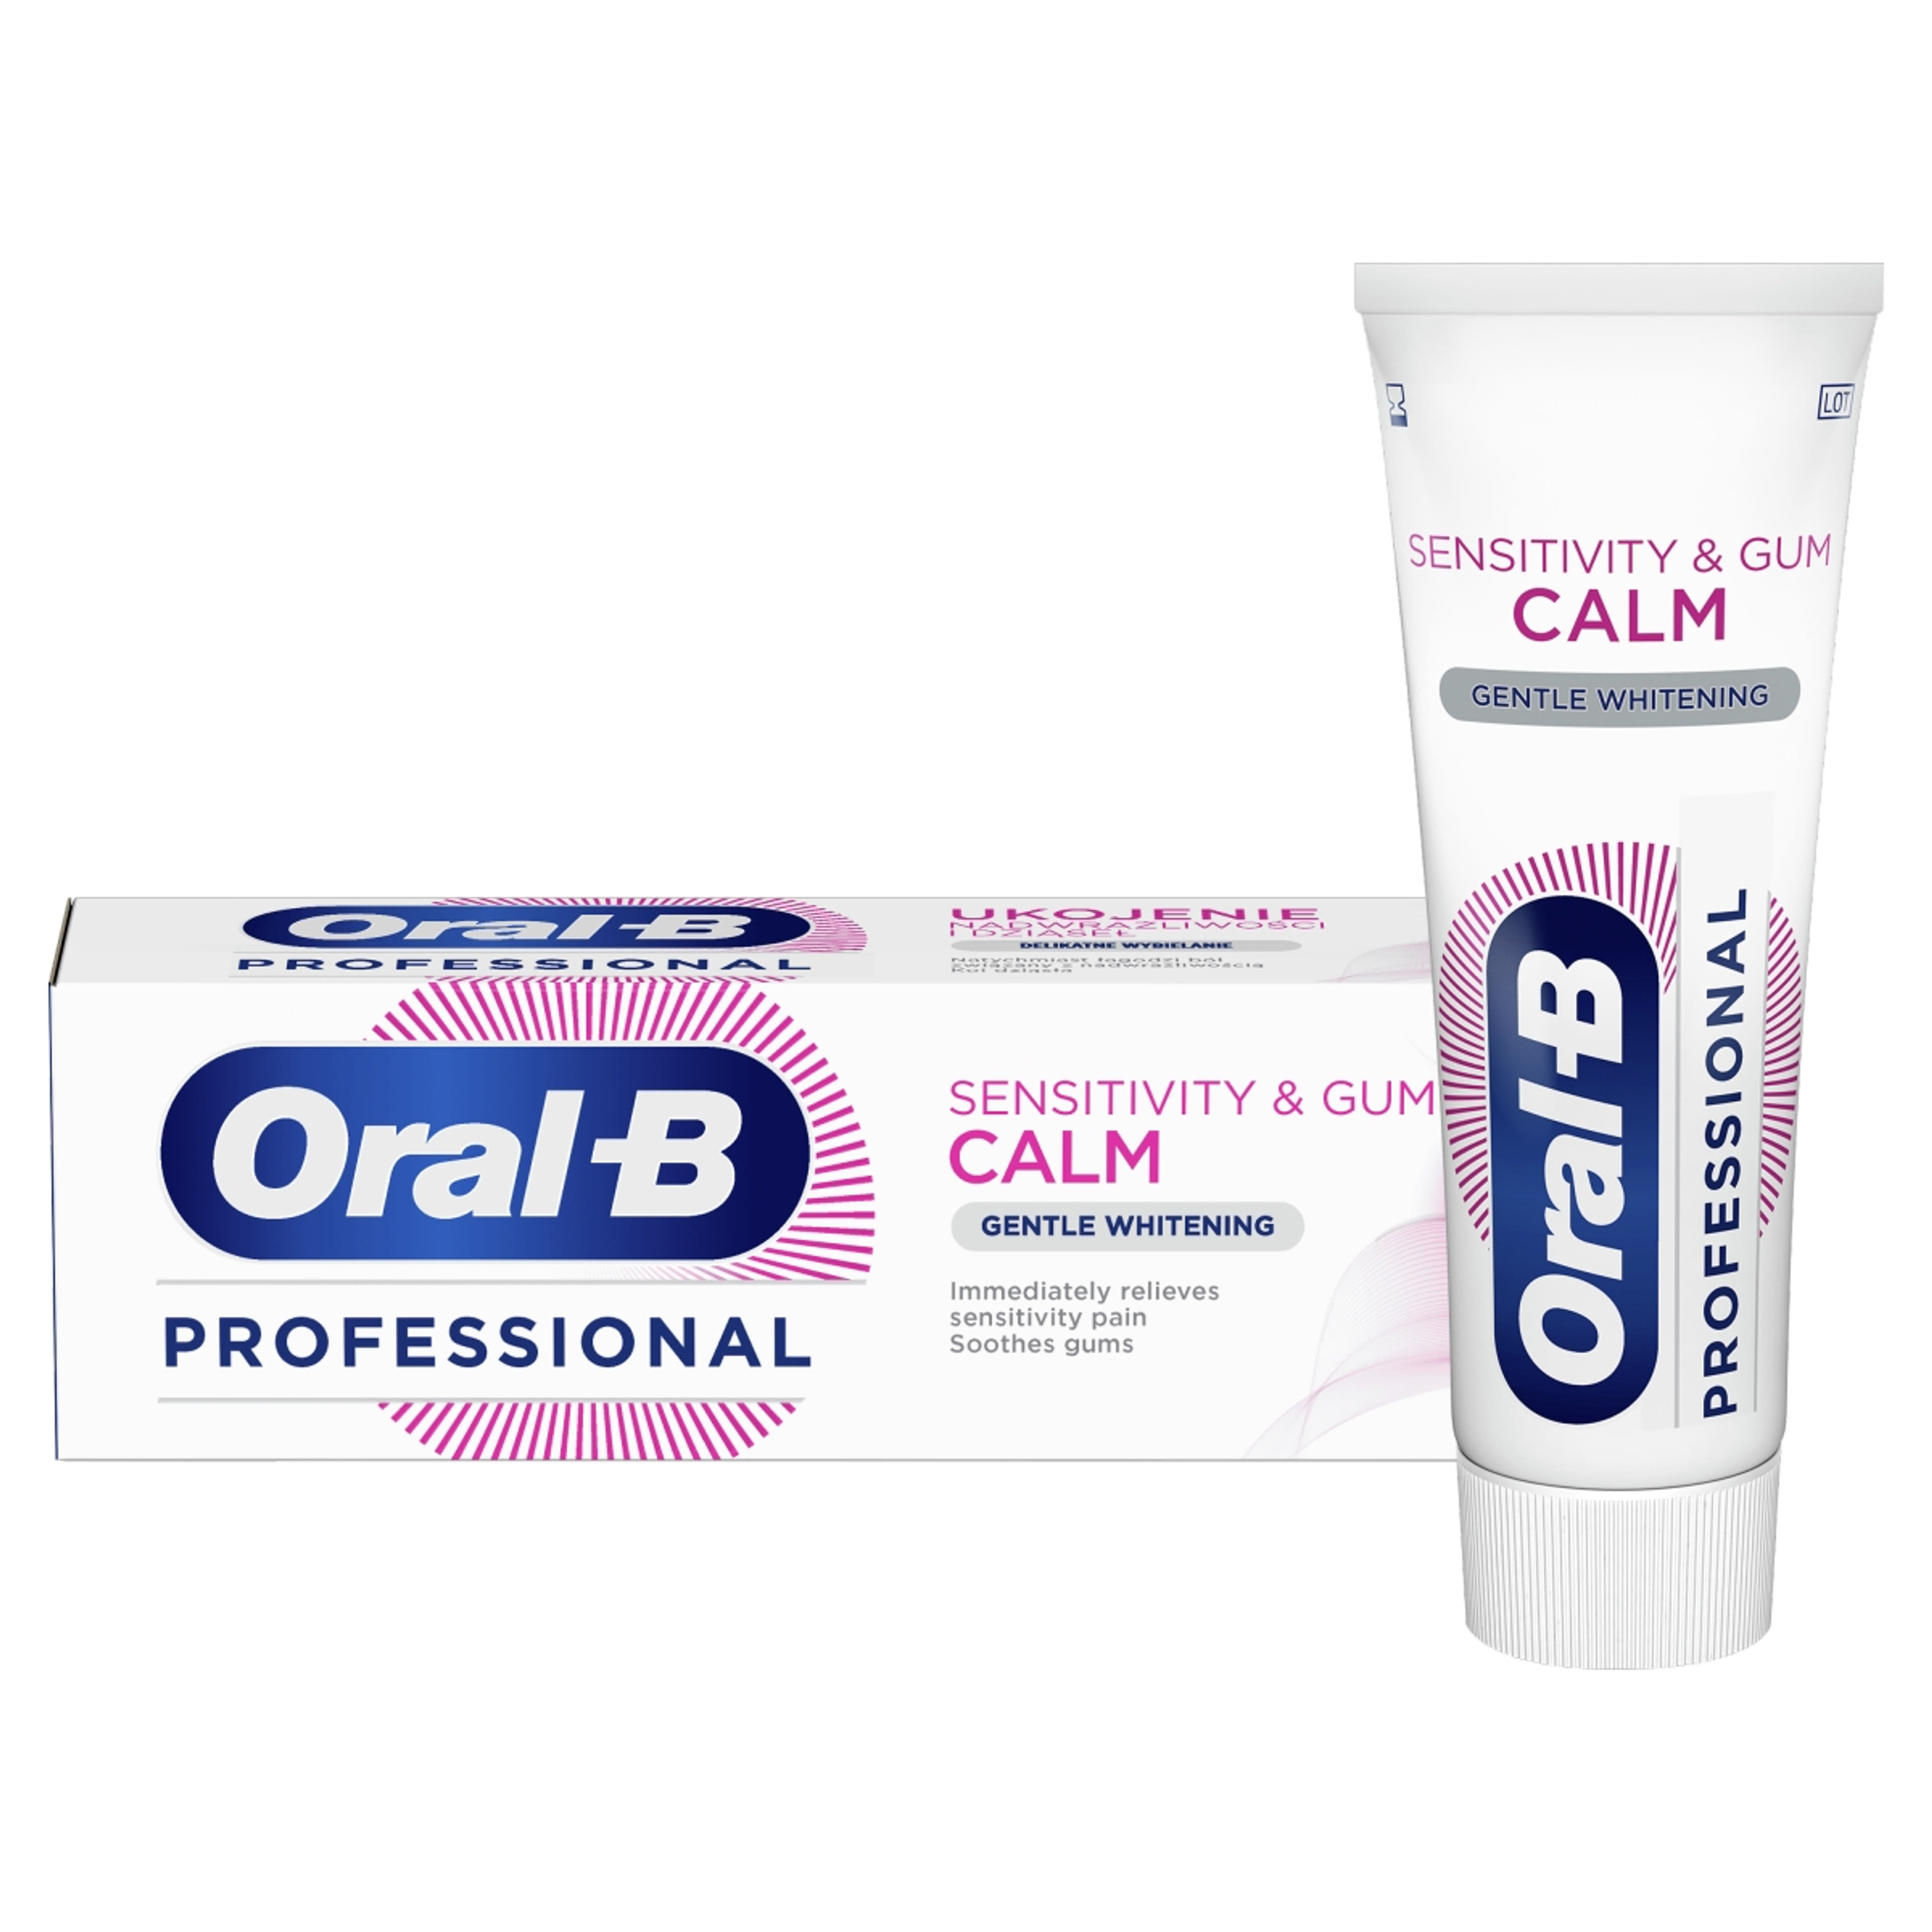 Oral-B Professional Sensitivity&Gum Calm Gentle Whitening fogkrém - 75 ml-2